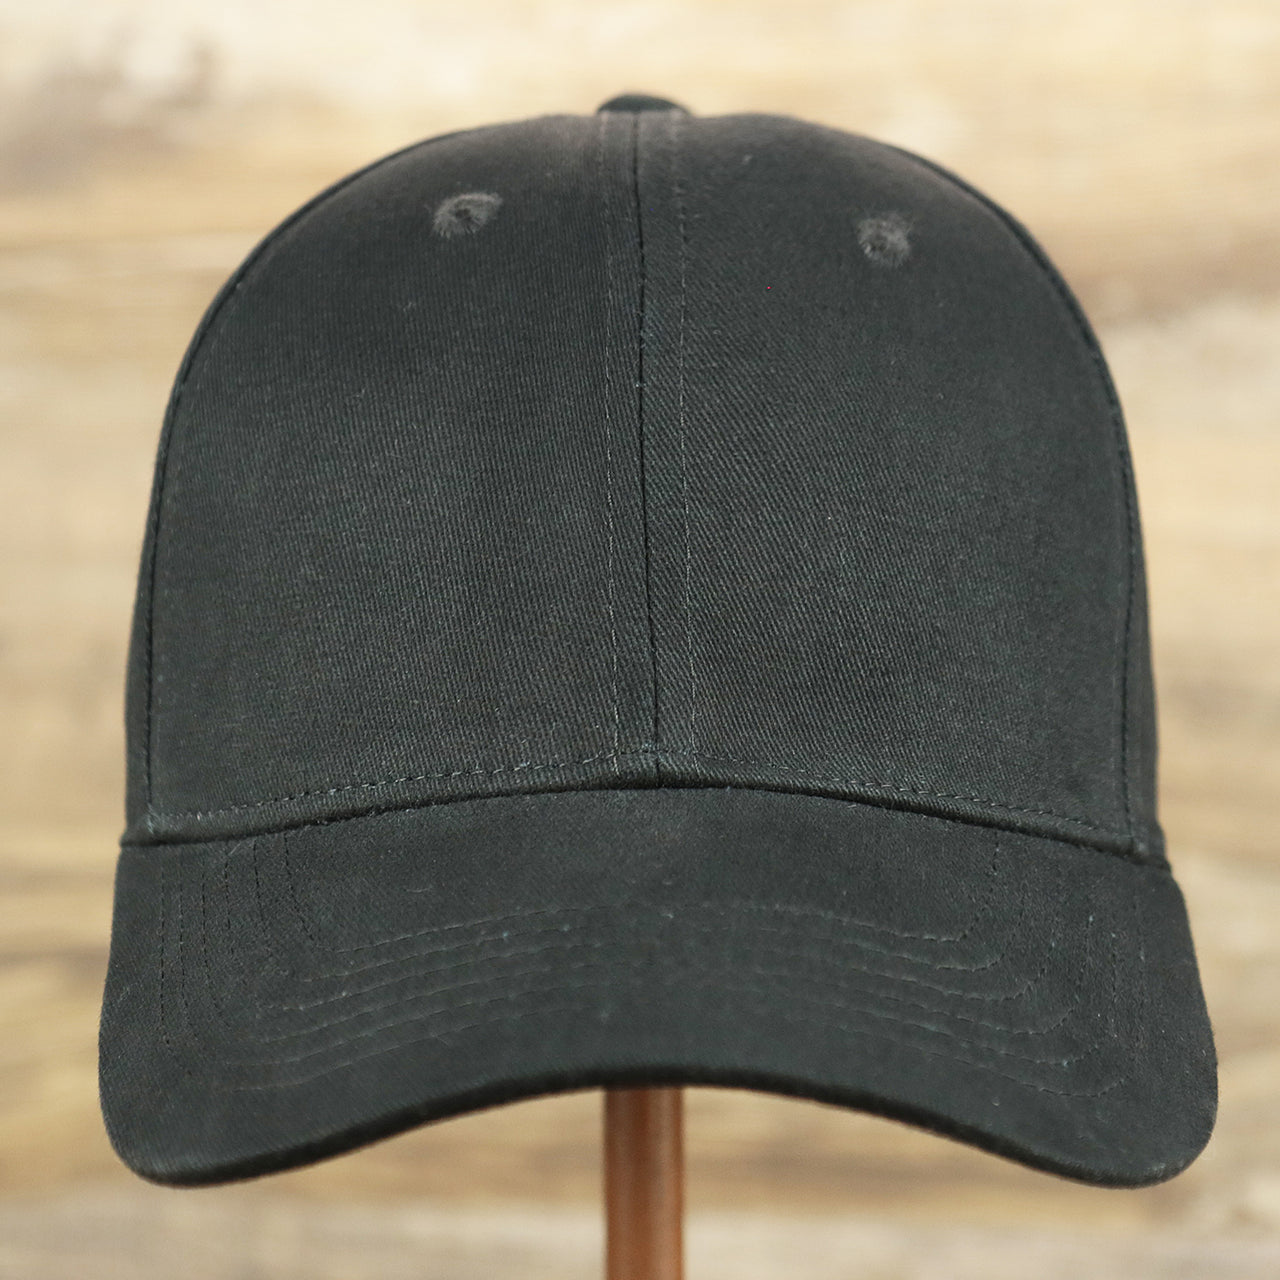 The Jet Black Structured Cotton Blank Small Fit Flexfit Cap | Black Stretch Fit Caps